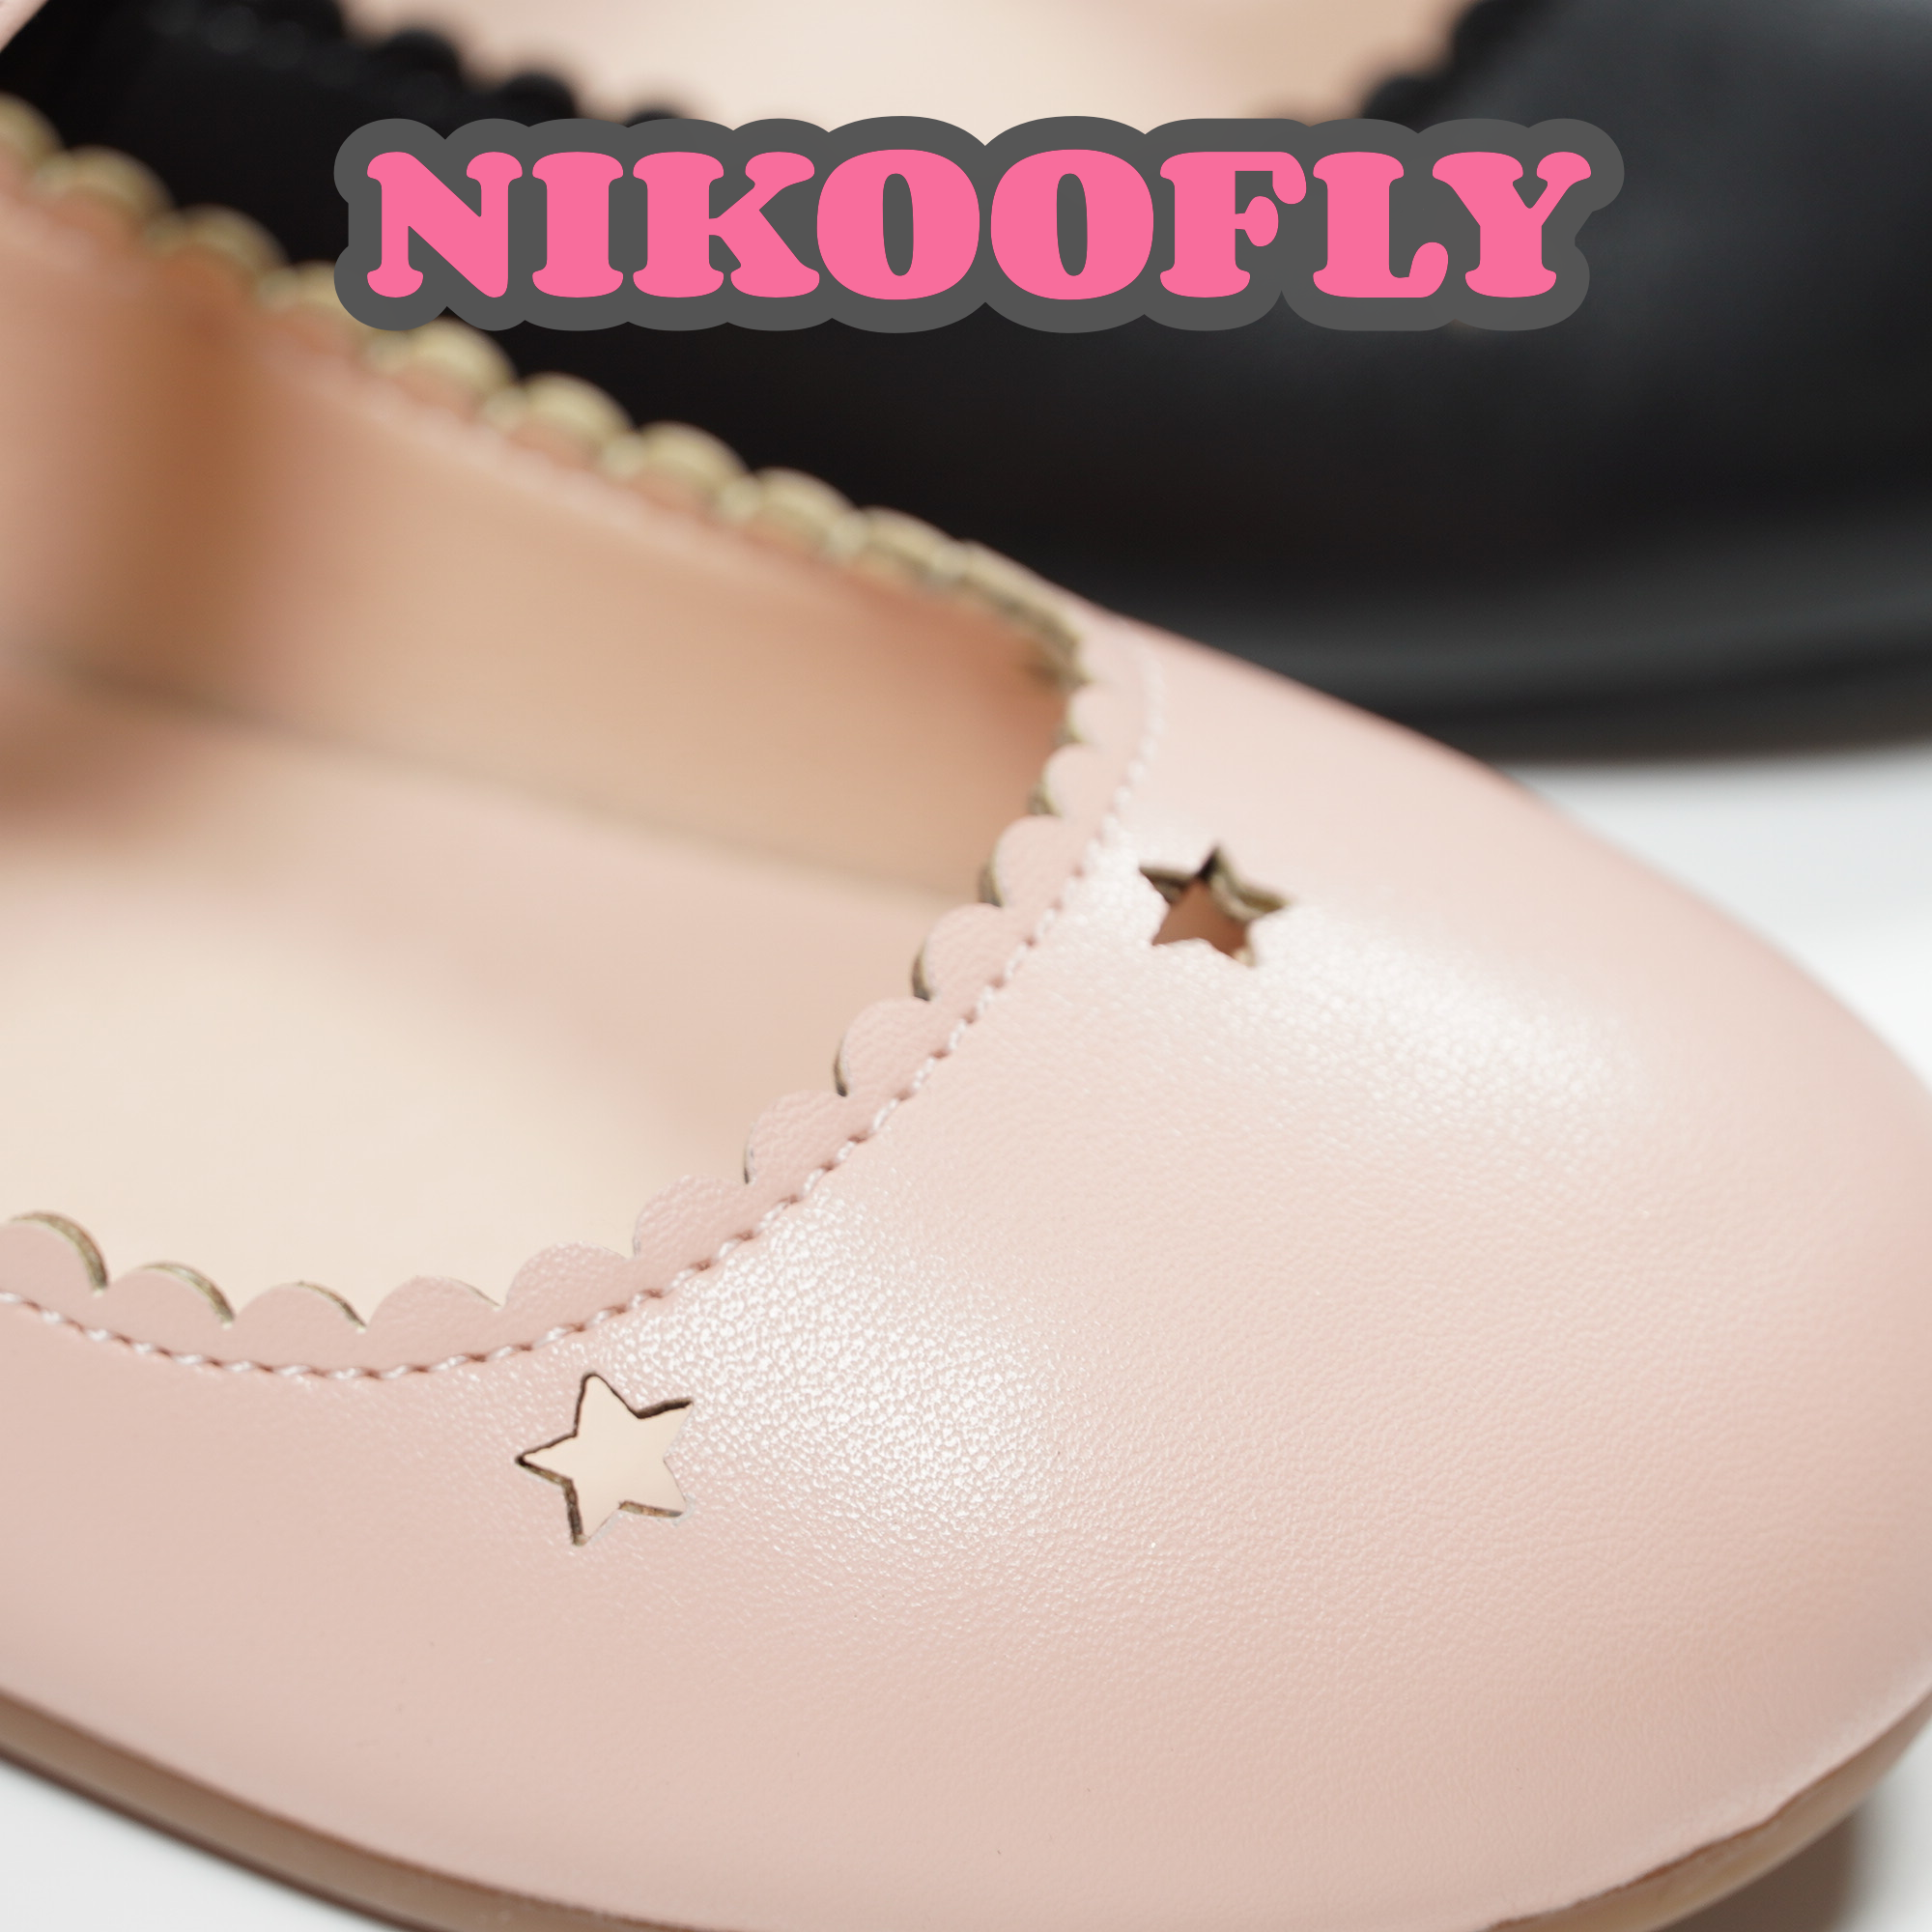 Nikoofly-Girls-Hollow-Star-Shaped-School-Uniform-Shoes-HSA5602K-16